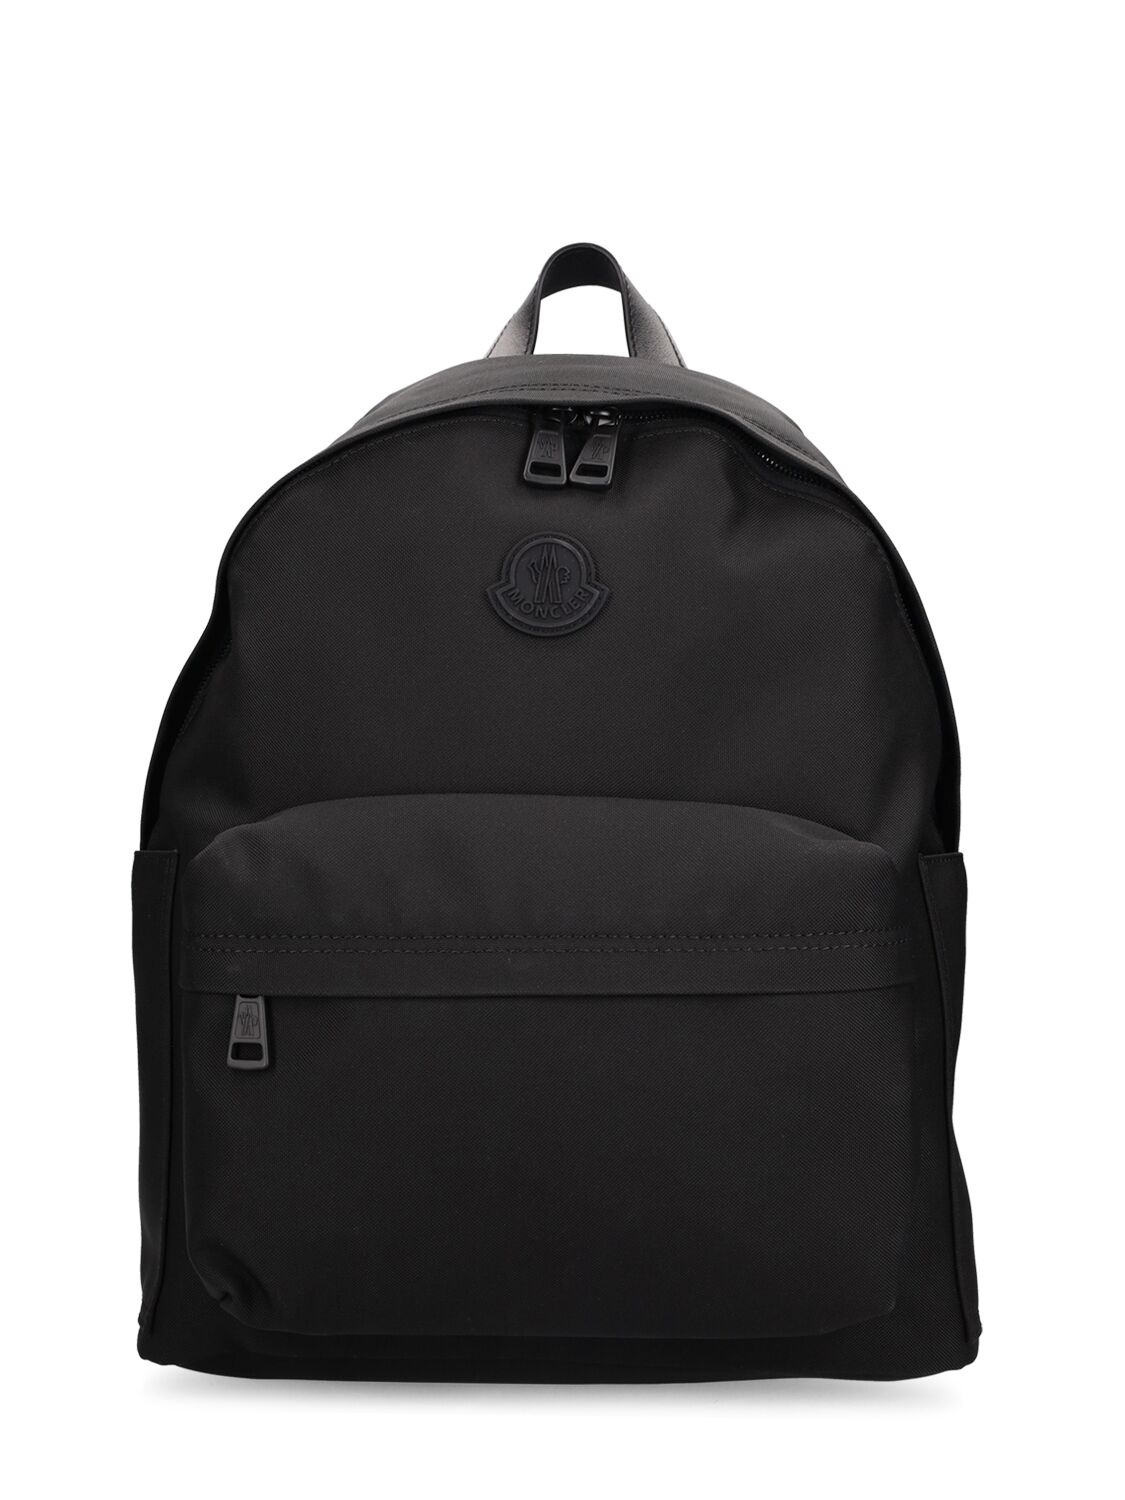 Image of New Pierrick Nylon Backpack